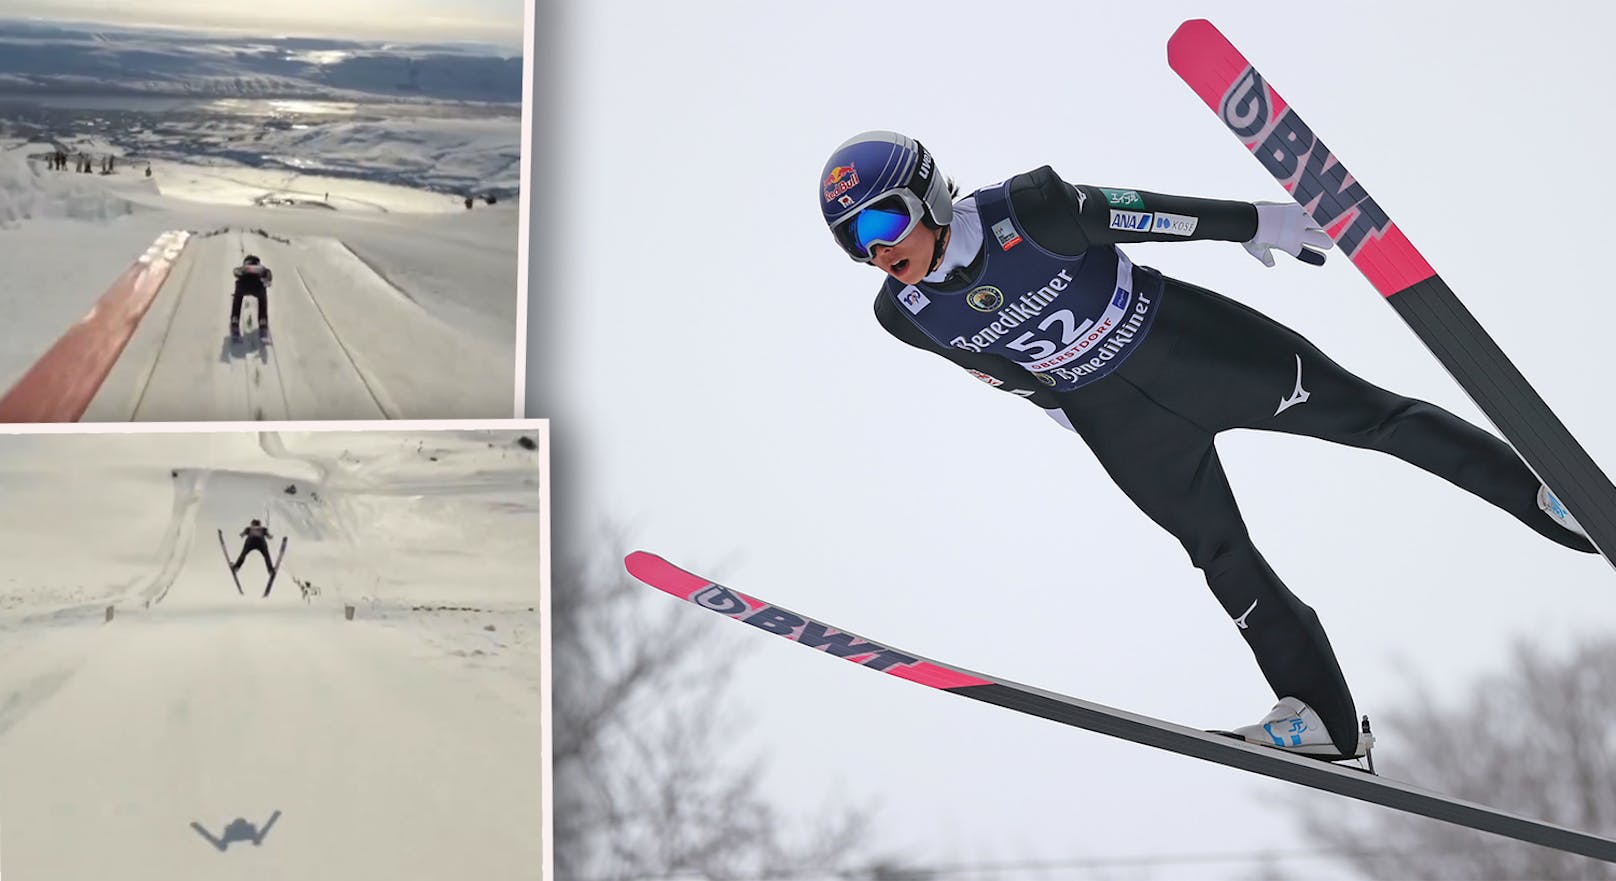 Skisprung-Star verbessert auf Mega-Schanze Weltrekord